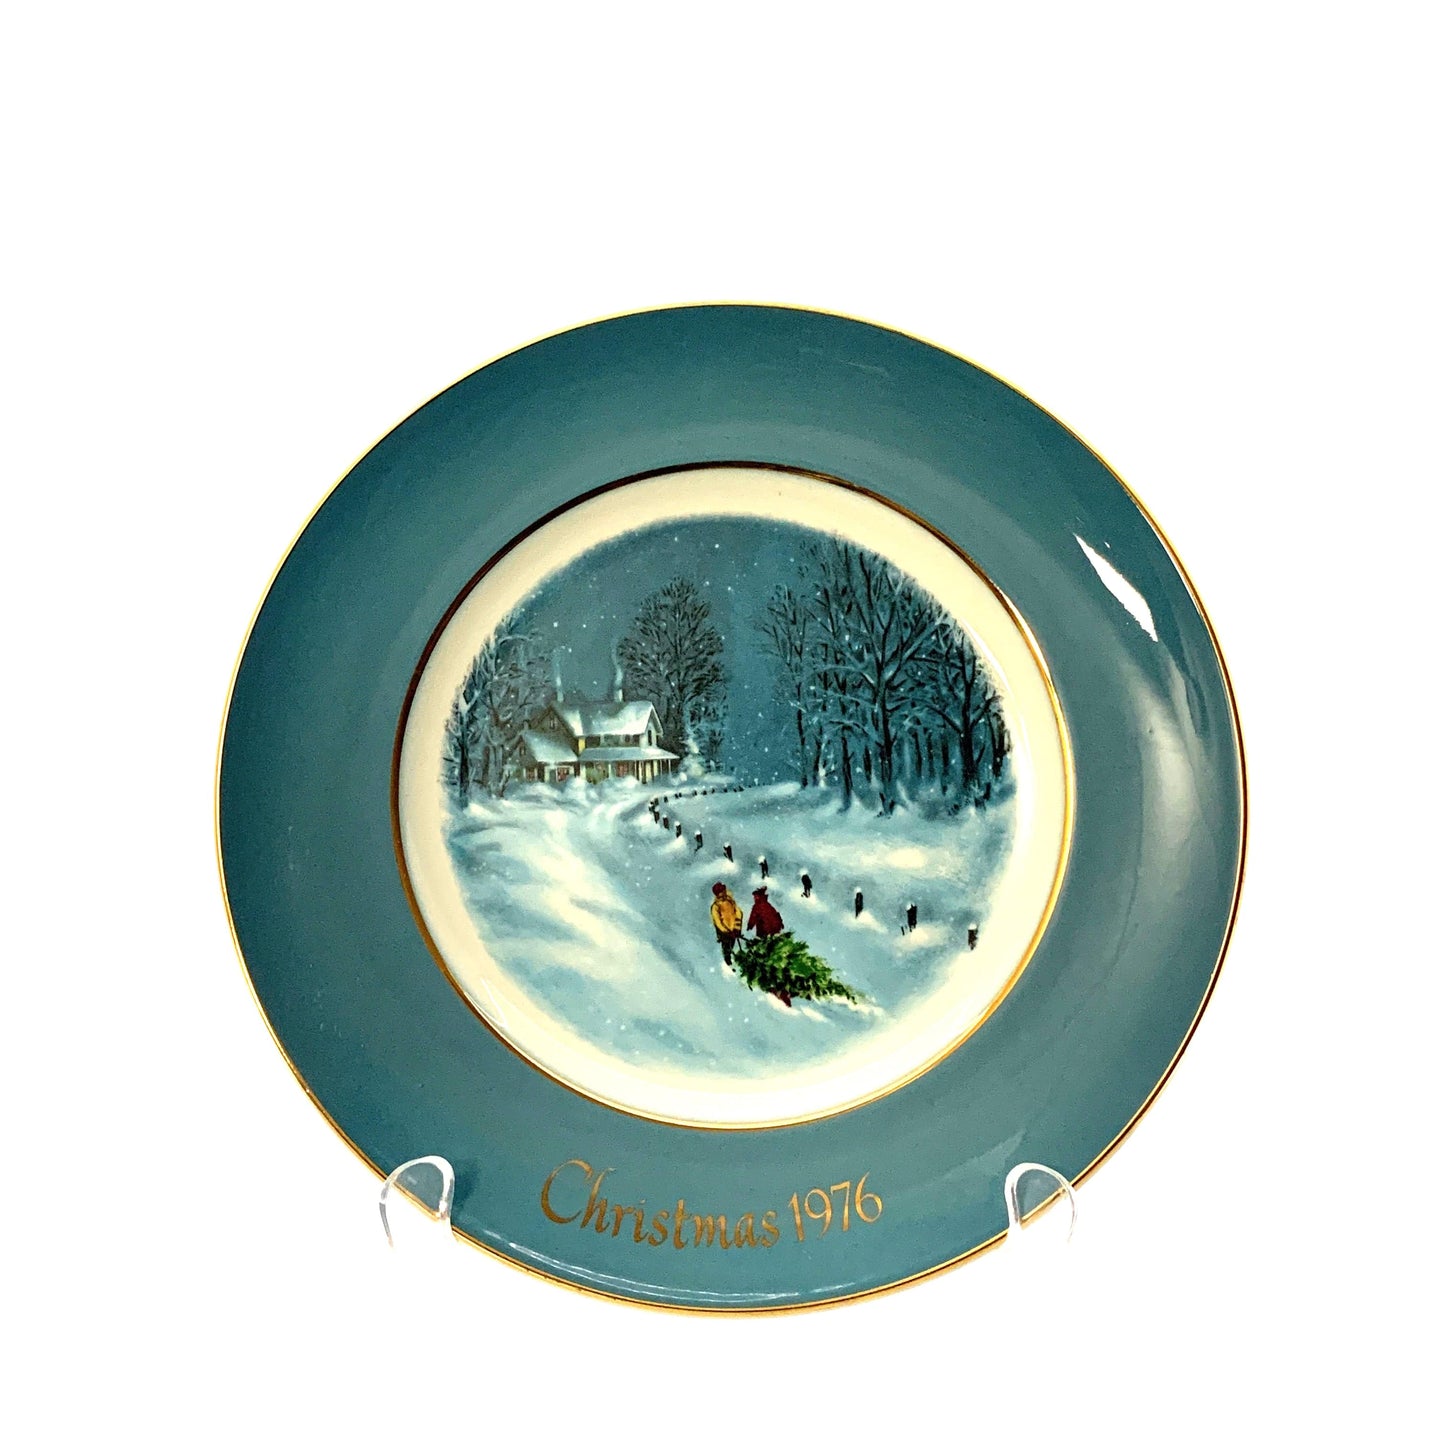 Vintage Avon Christmas Plate Series Third Edition “Bringing Home The Tree” 1976